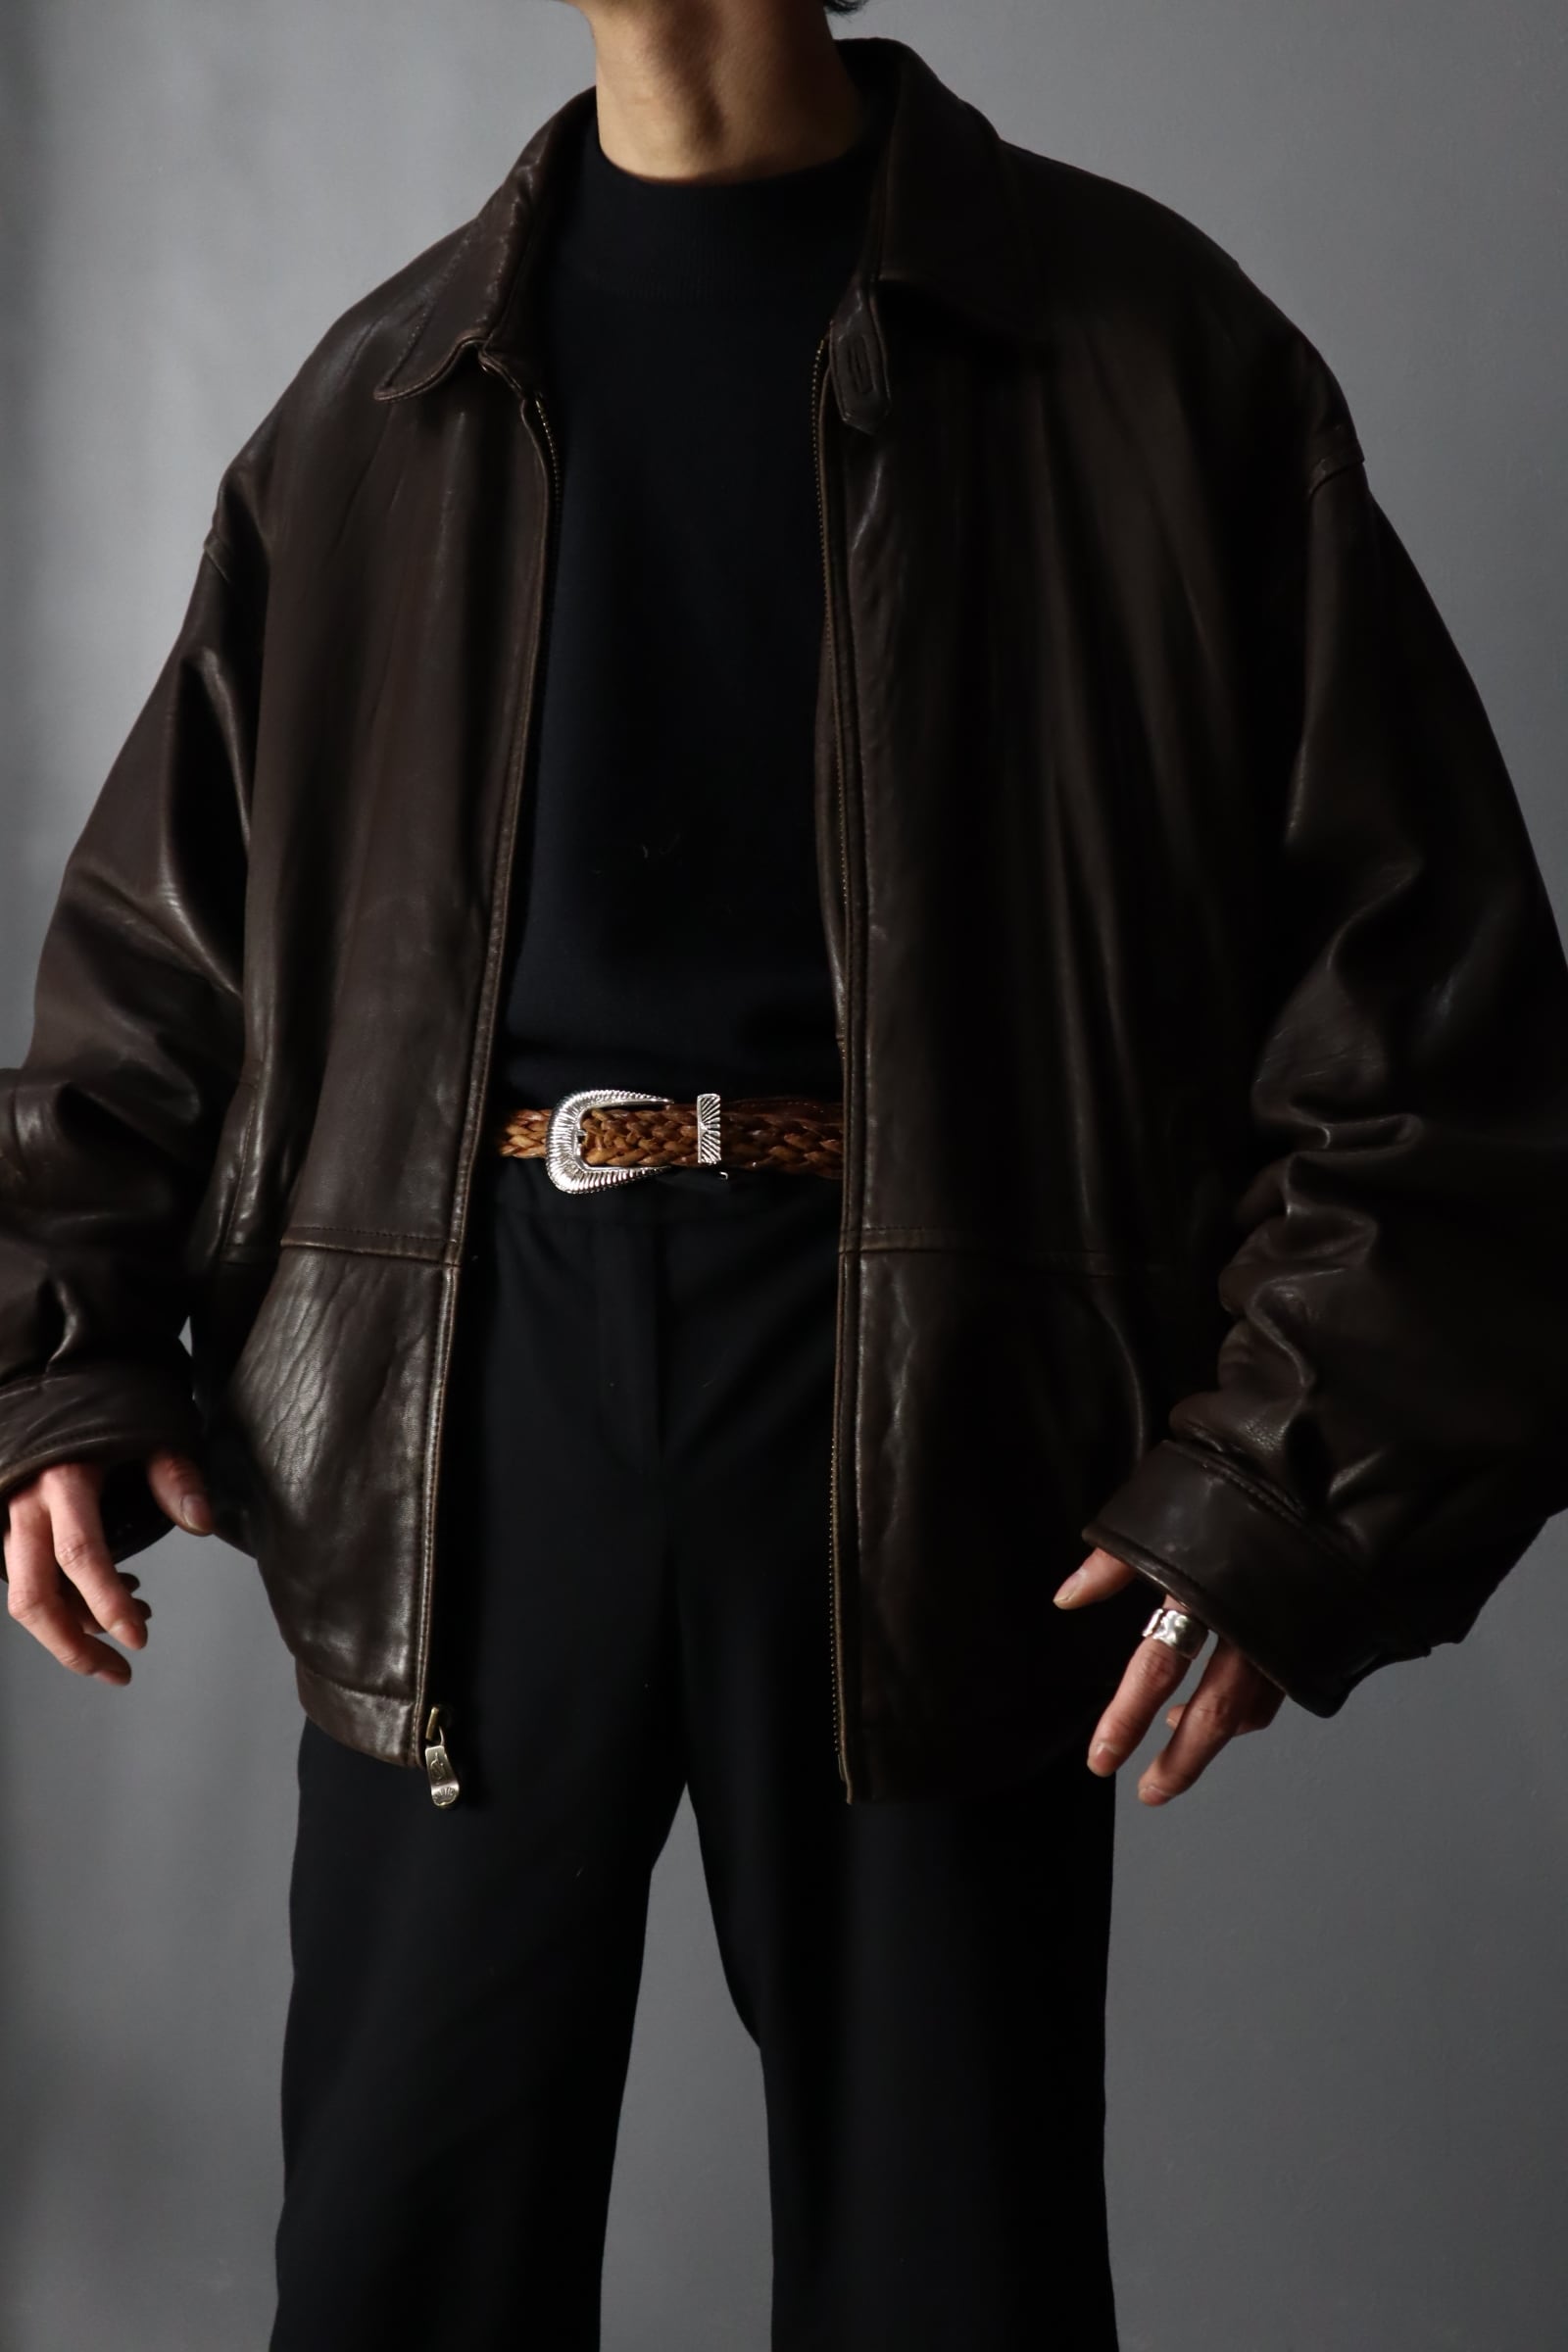 NAUTICA/ノーティカ Vegan Leather Jacket